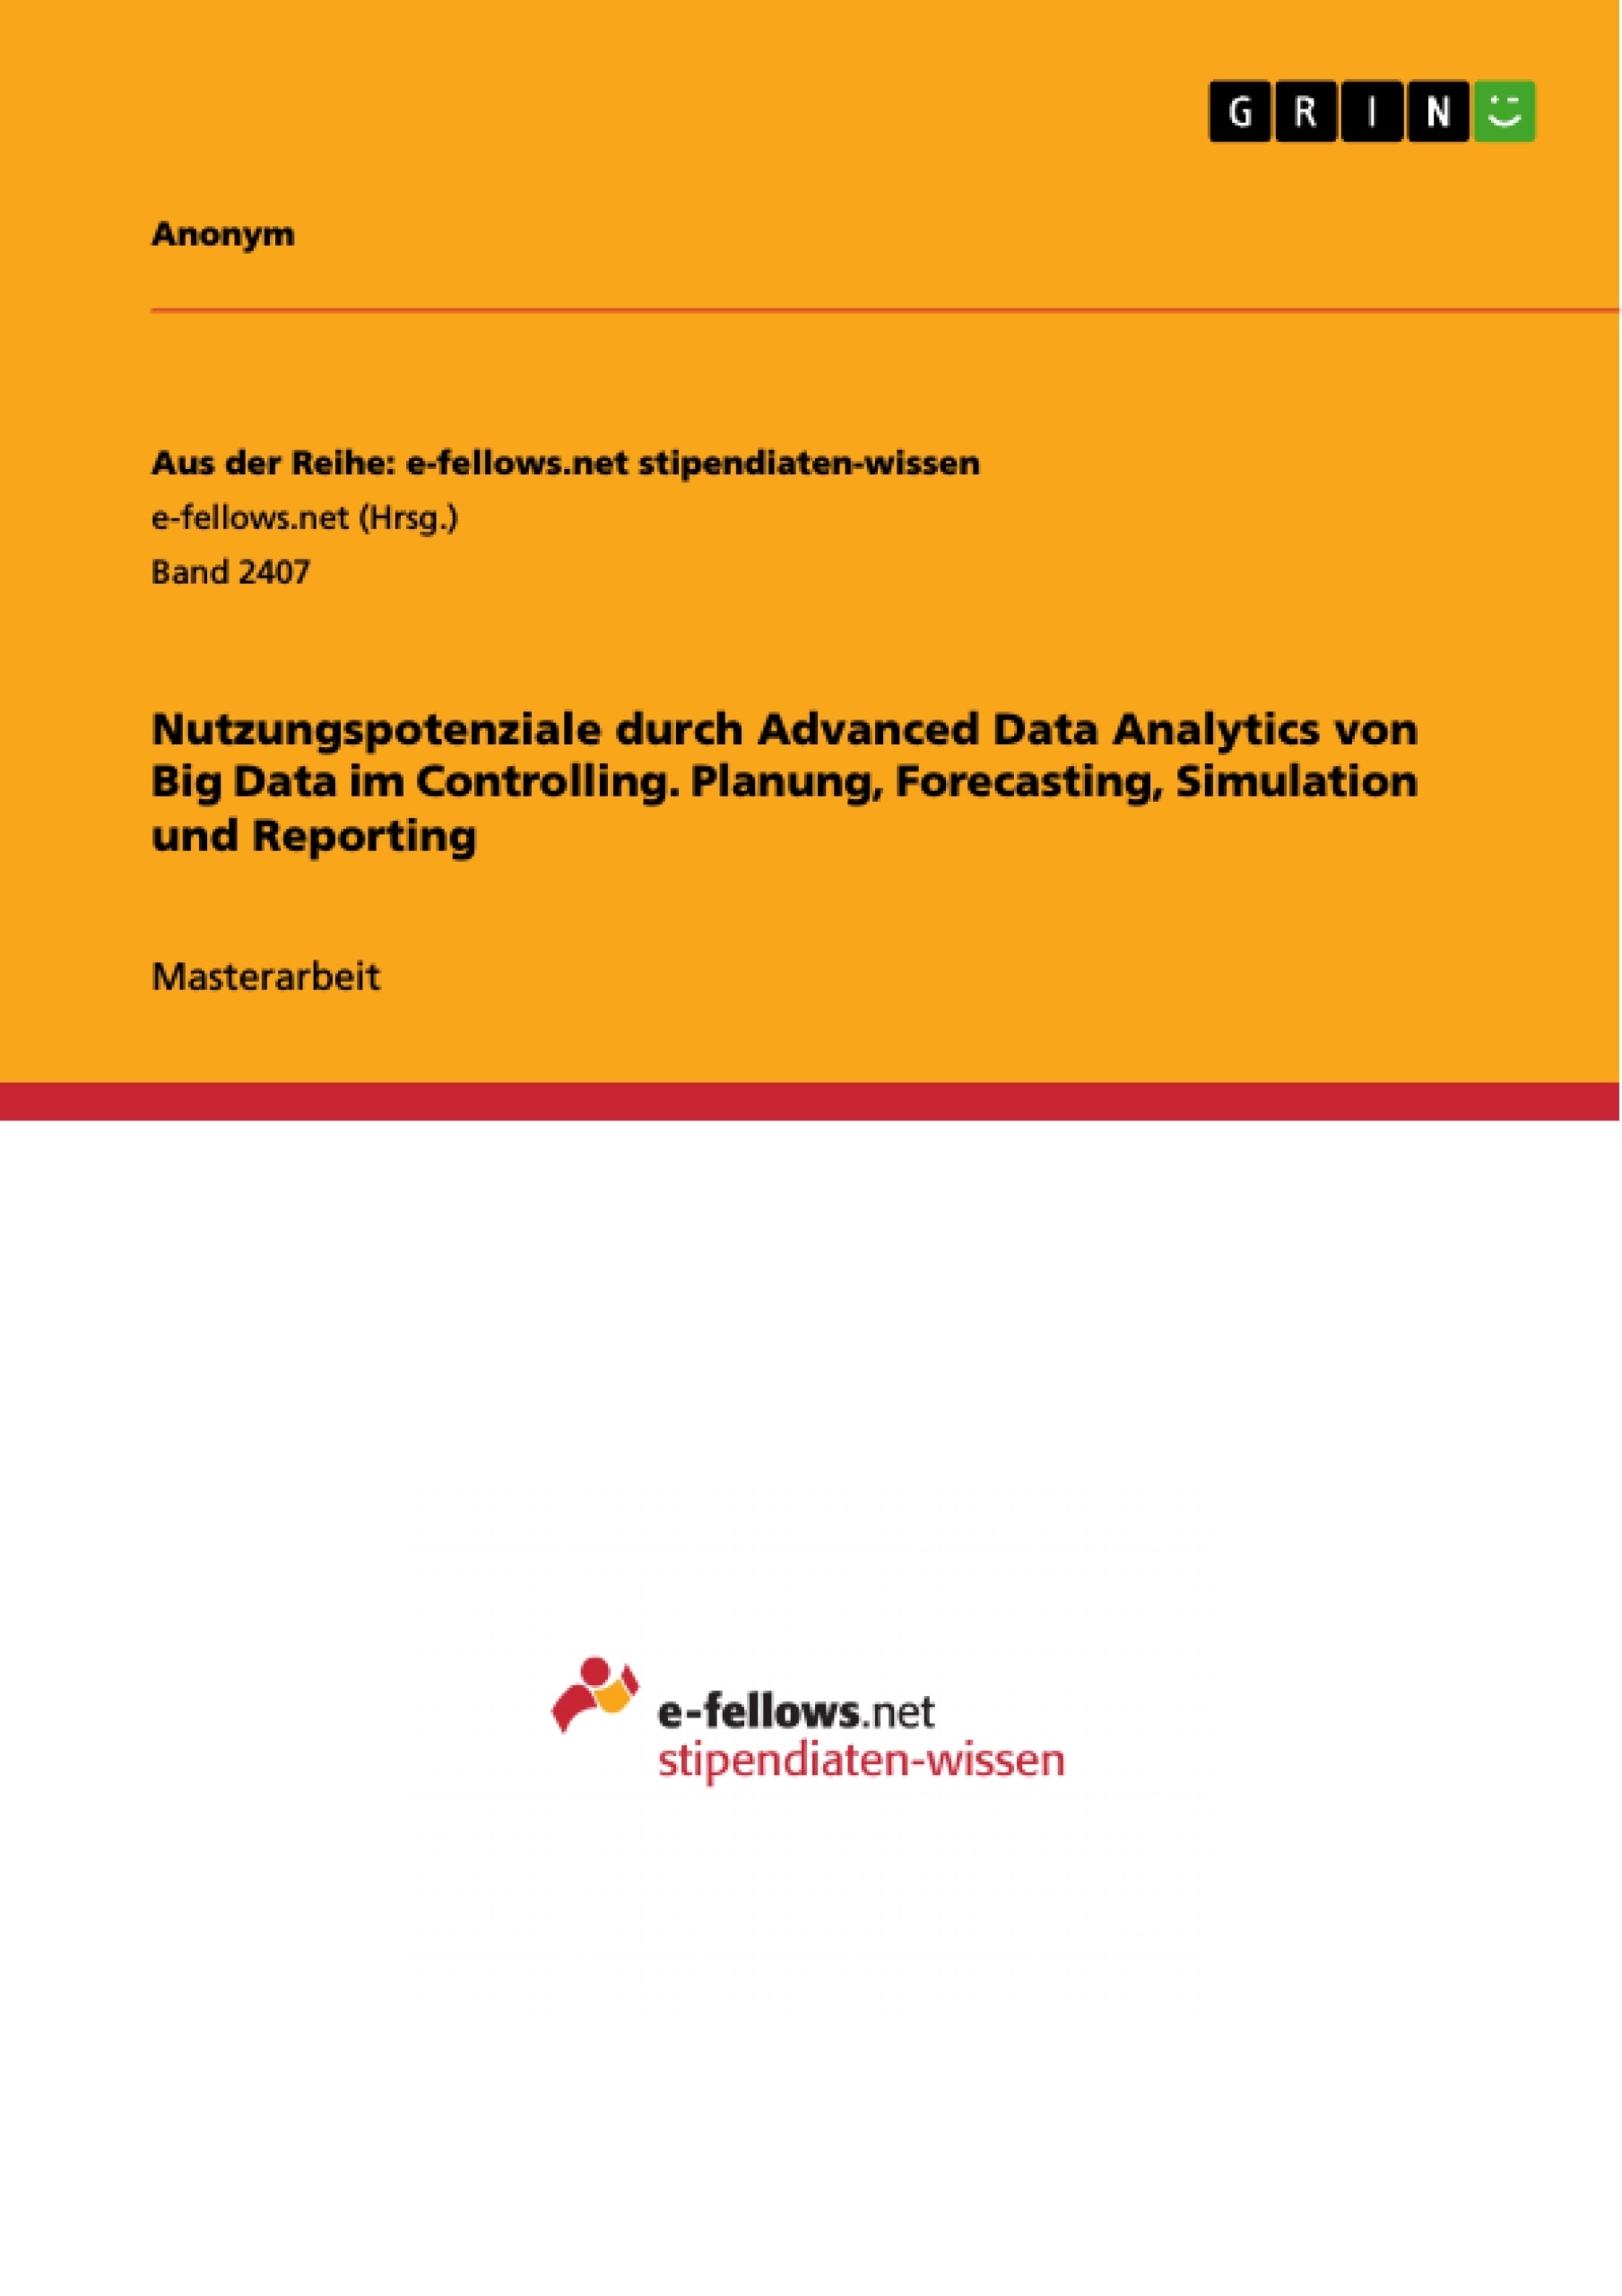 Title: Nutzungspotenziale durch Advanced Data Analytics von Big Data im Controlling. Planung, Forecasting, Simulation und Reporting